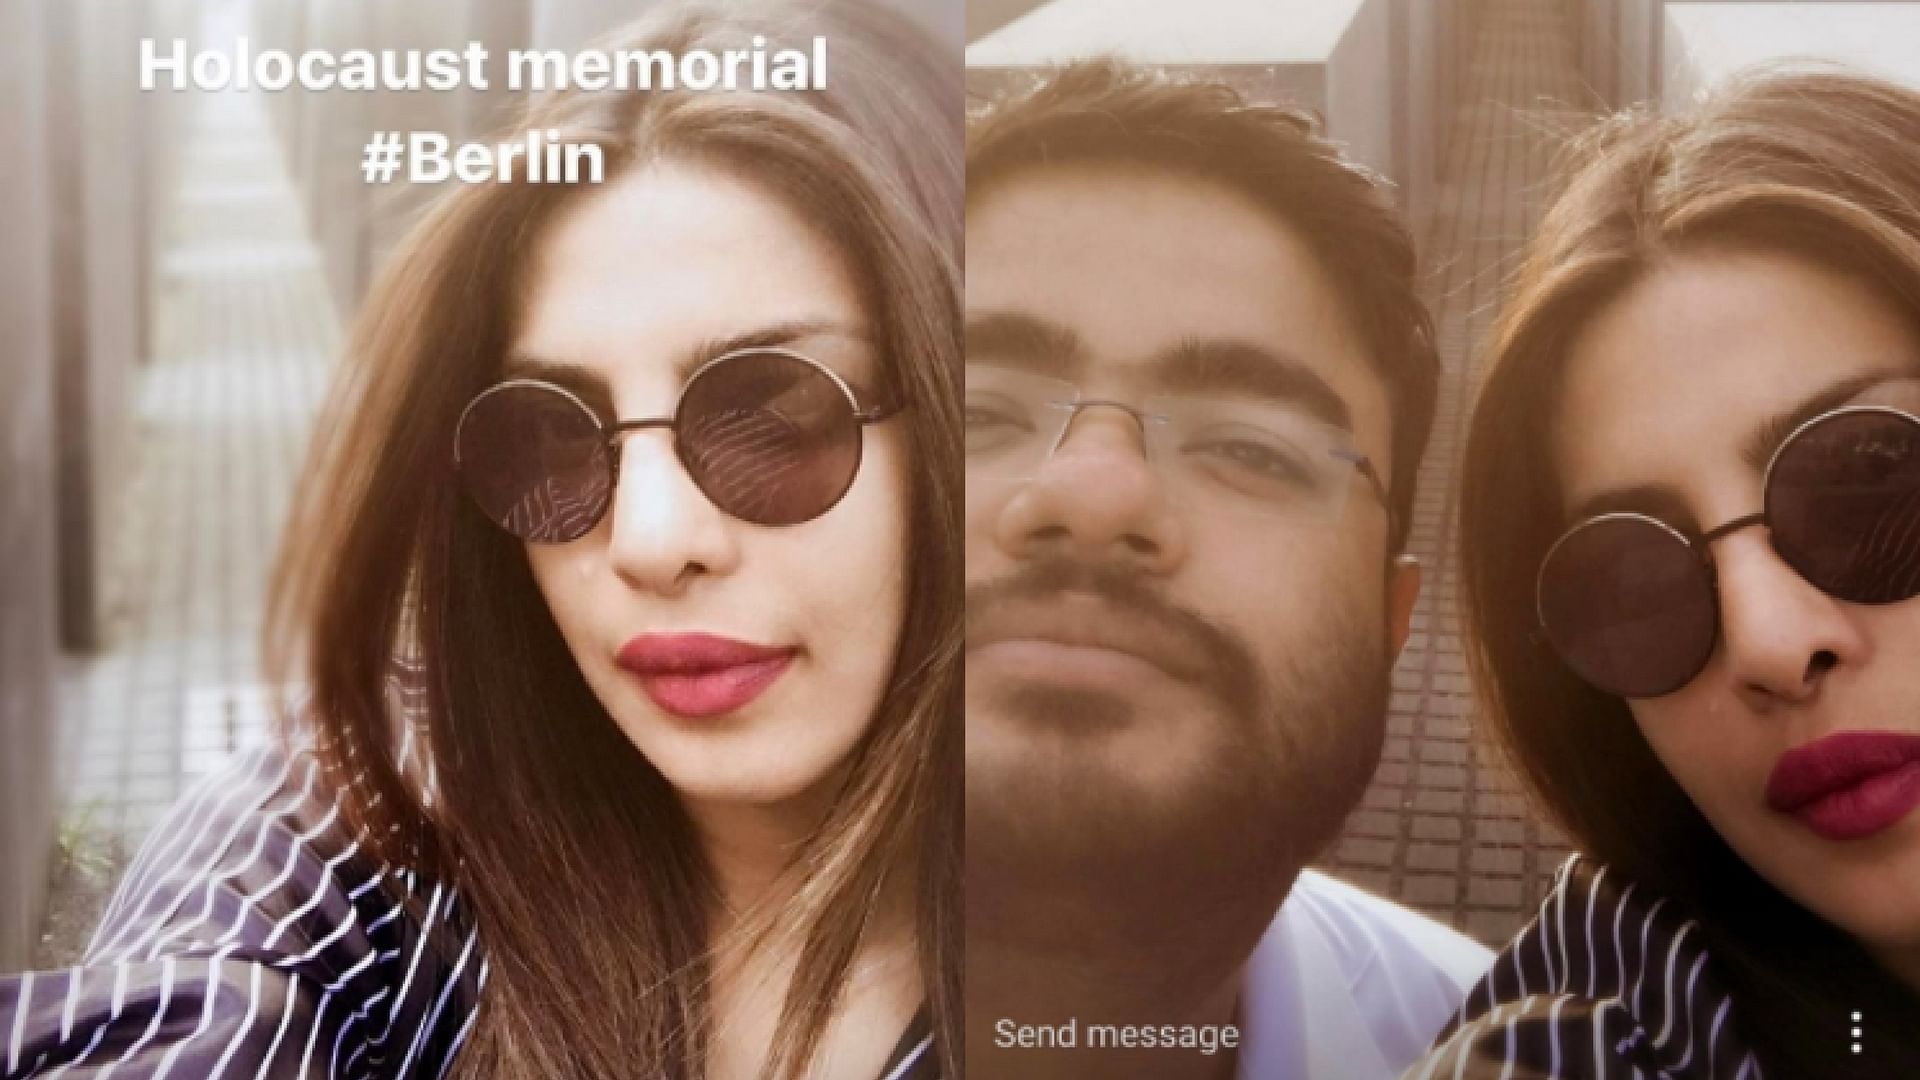 Priyanka and her brother’s selfies at the Holocaust Memorial. (Photo Courtesy: Instagram/@priyankachopra)